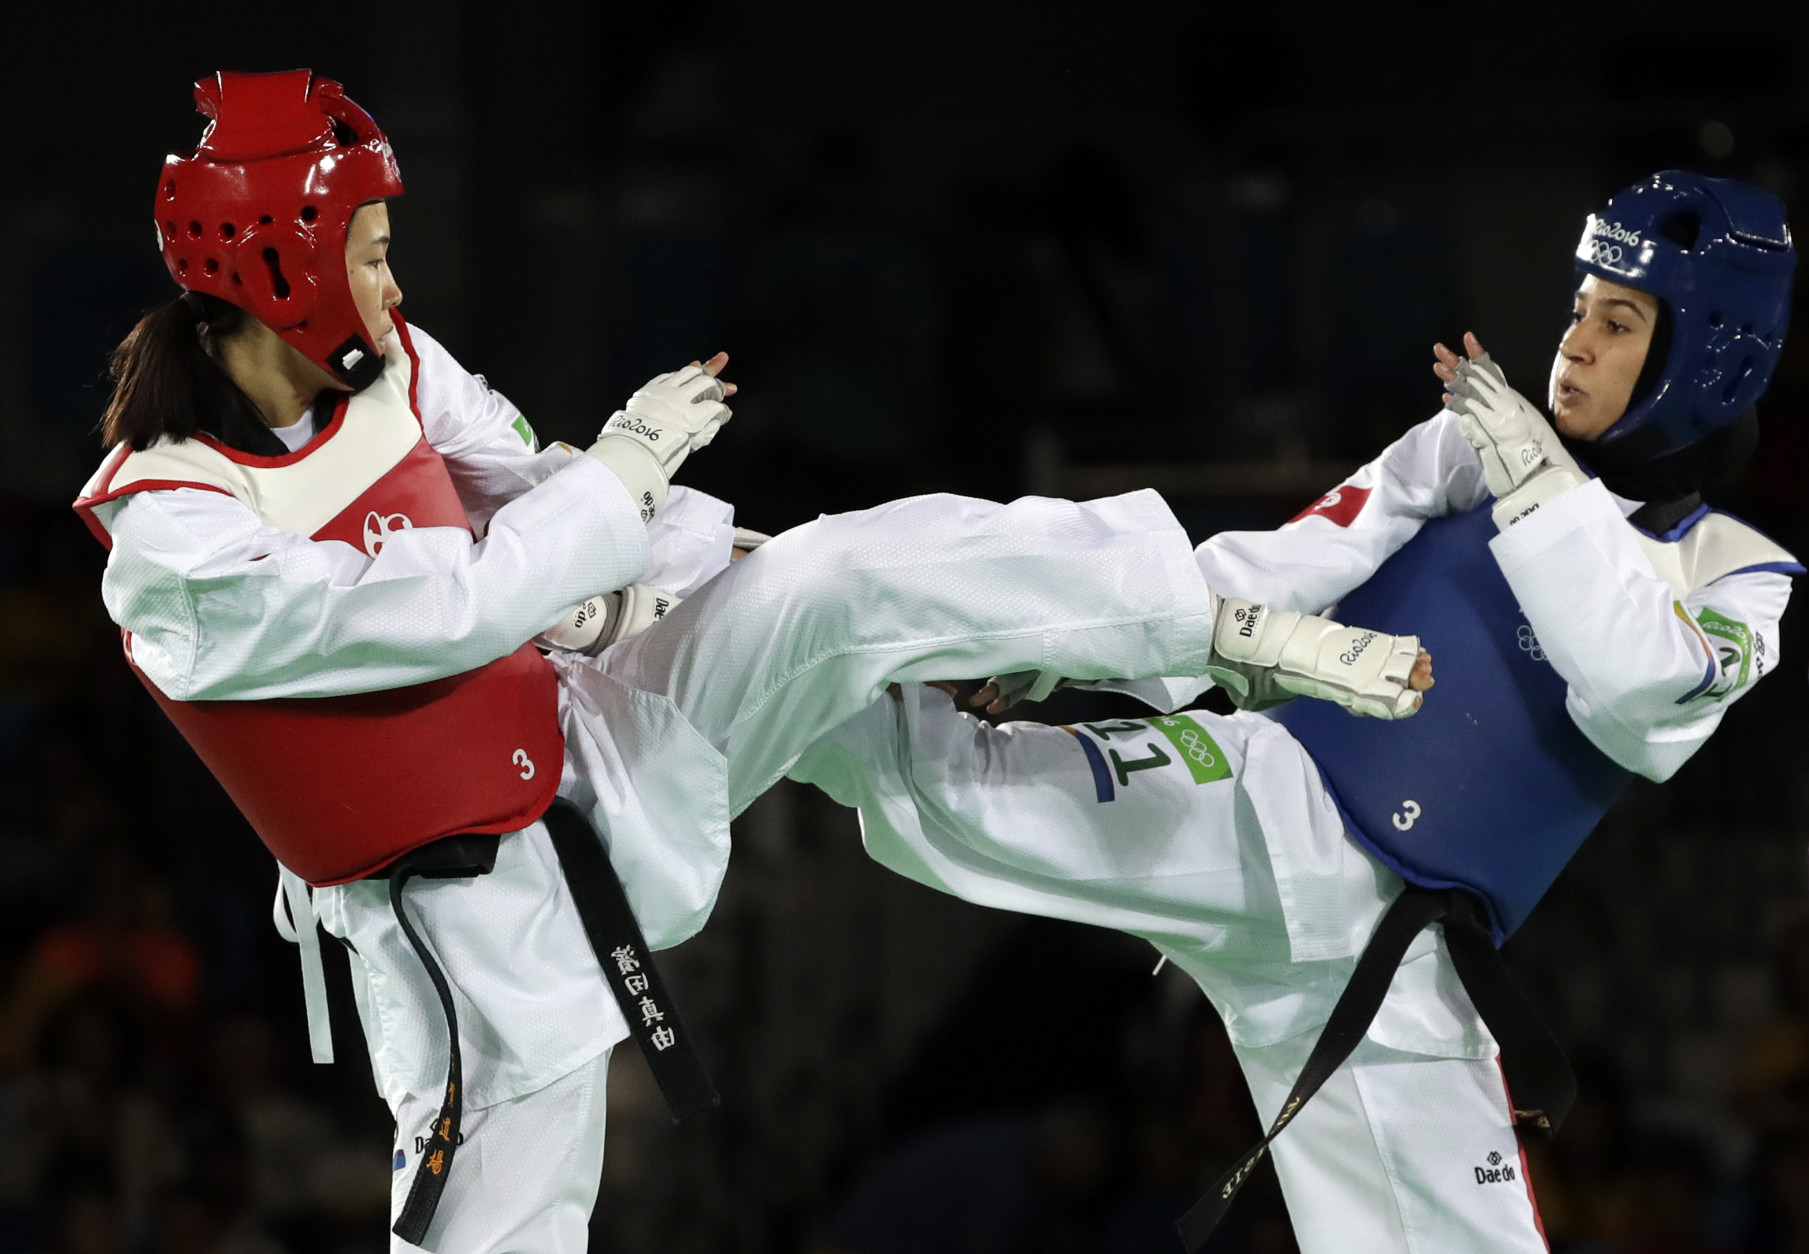 Rahma Bel Ali of Tunisia, right, and Hamada Mayu of Japan compete in a women's Taekwondo 57-kg event at the 2016 Summer Olympics in Rio de Janeiro, Brazil, Thursday, Aug. 18, 2016. (AP Photo/Andrew Medichini)